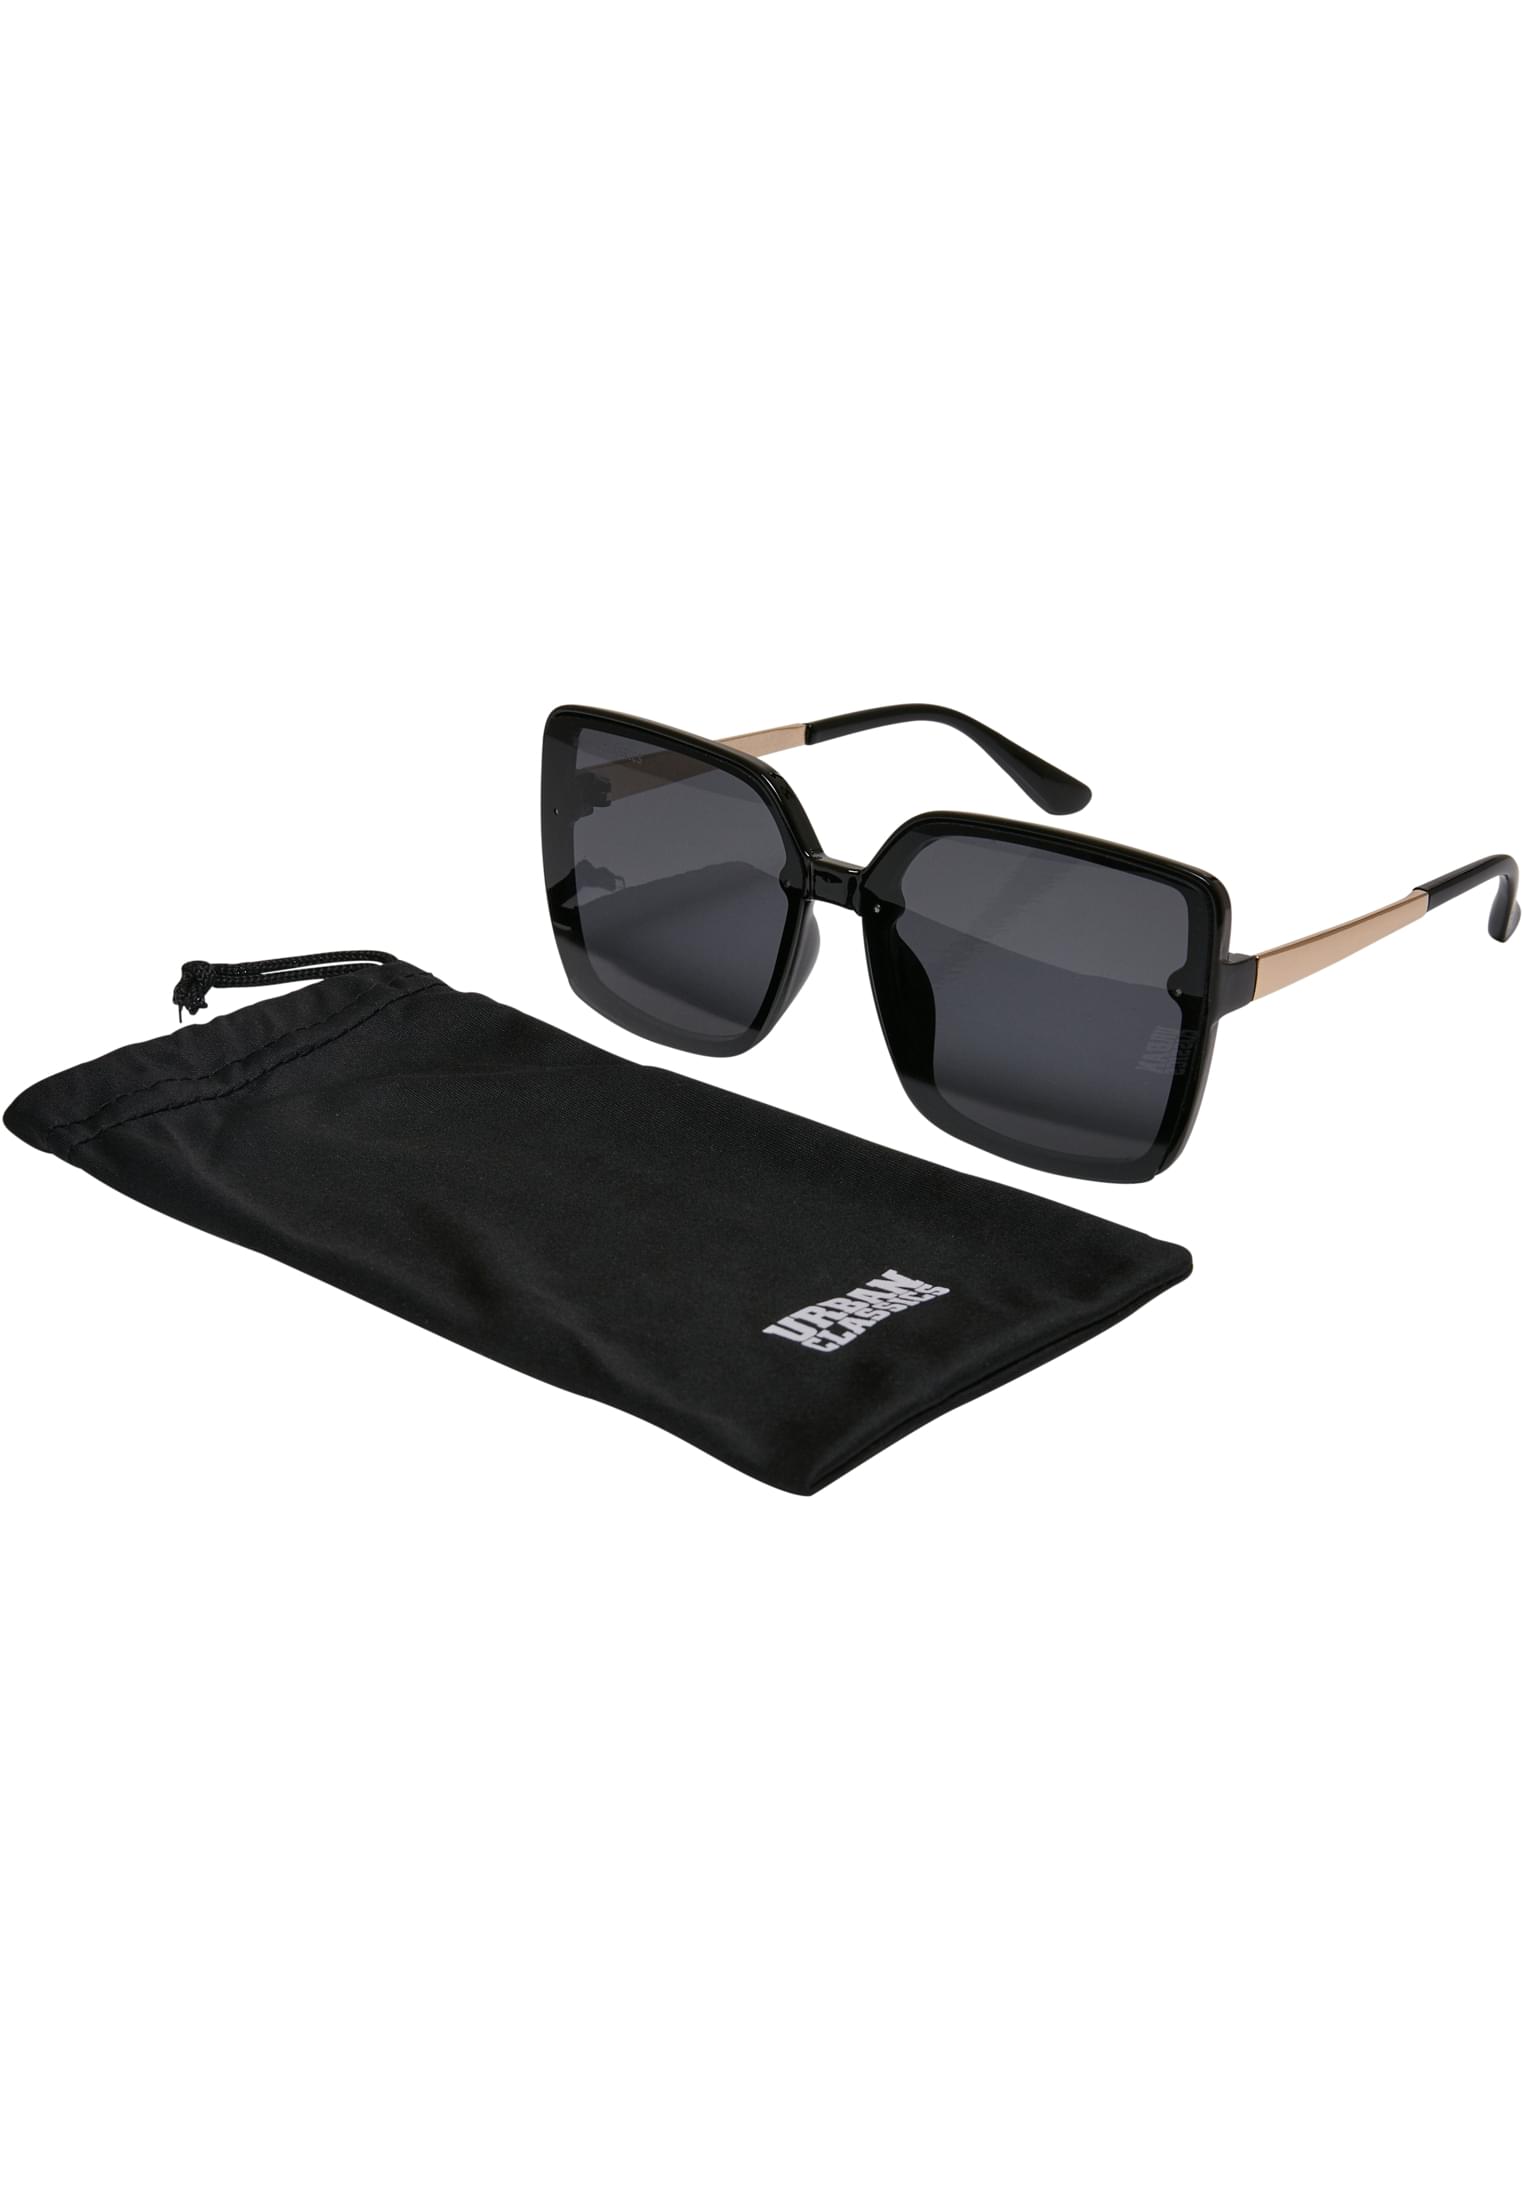 Sunglasses Turin black